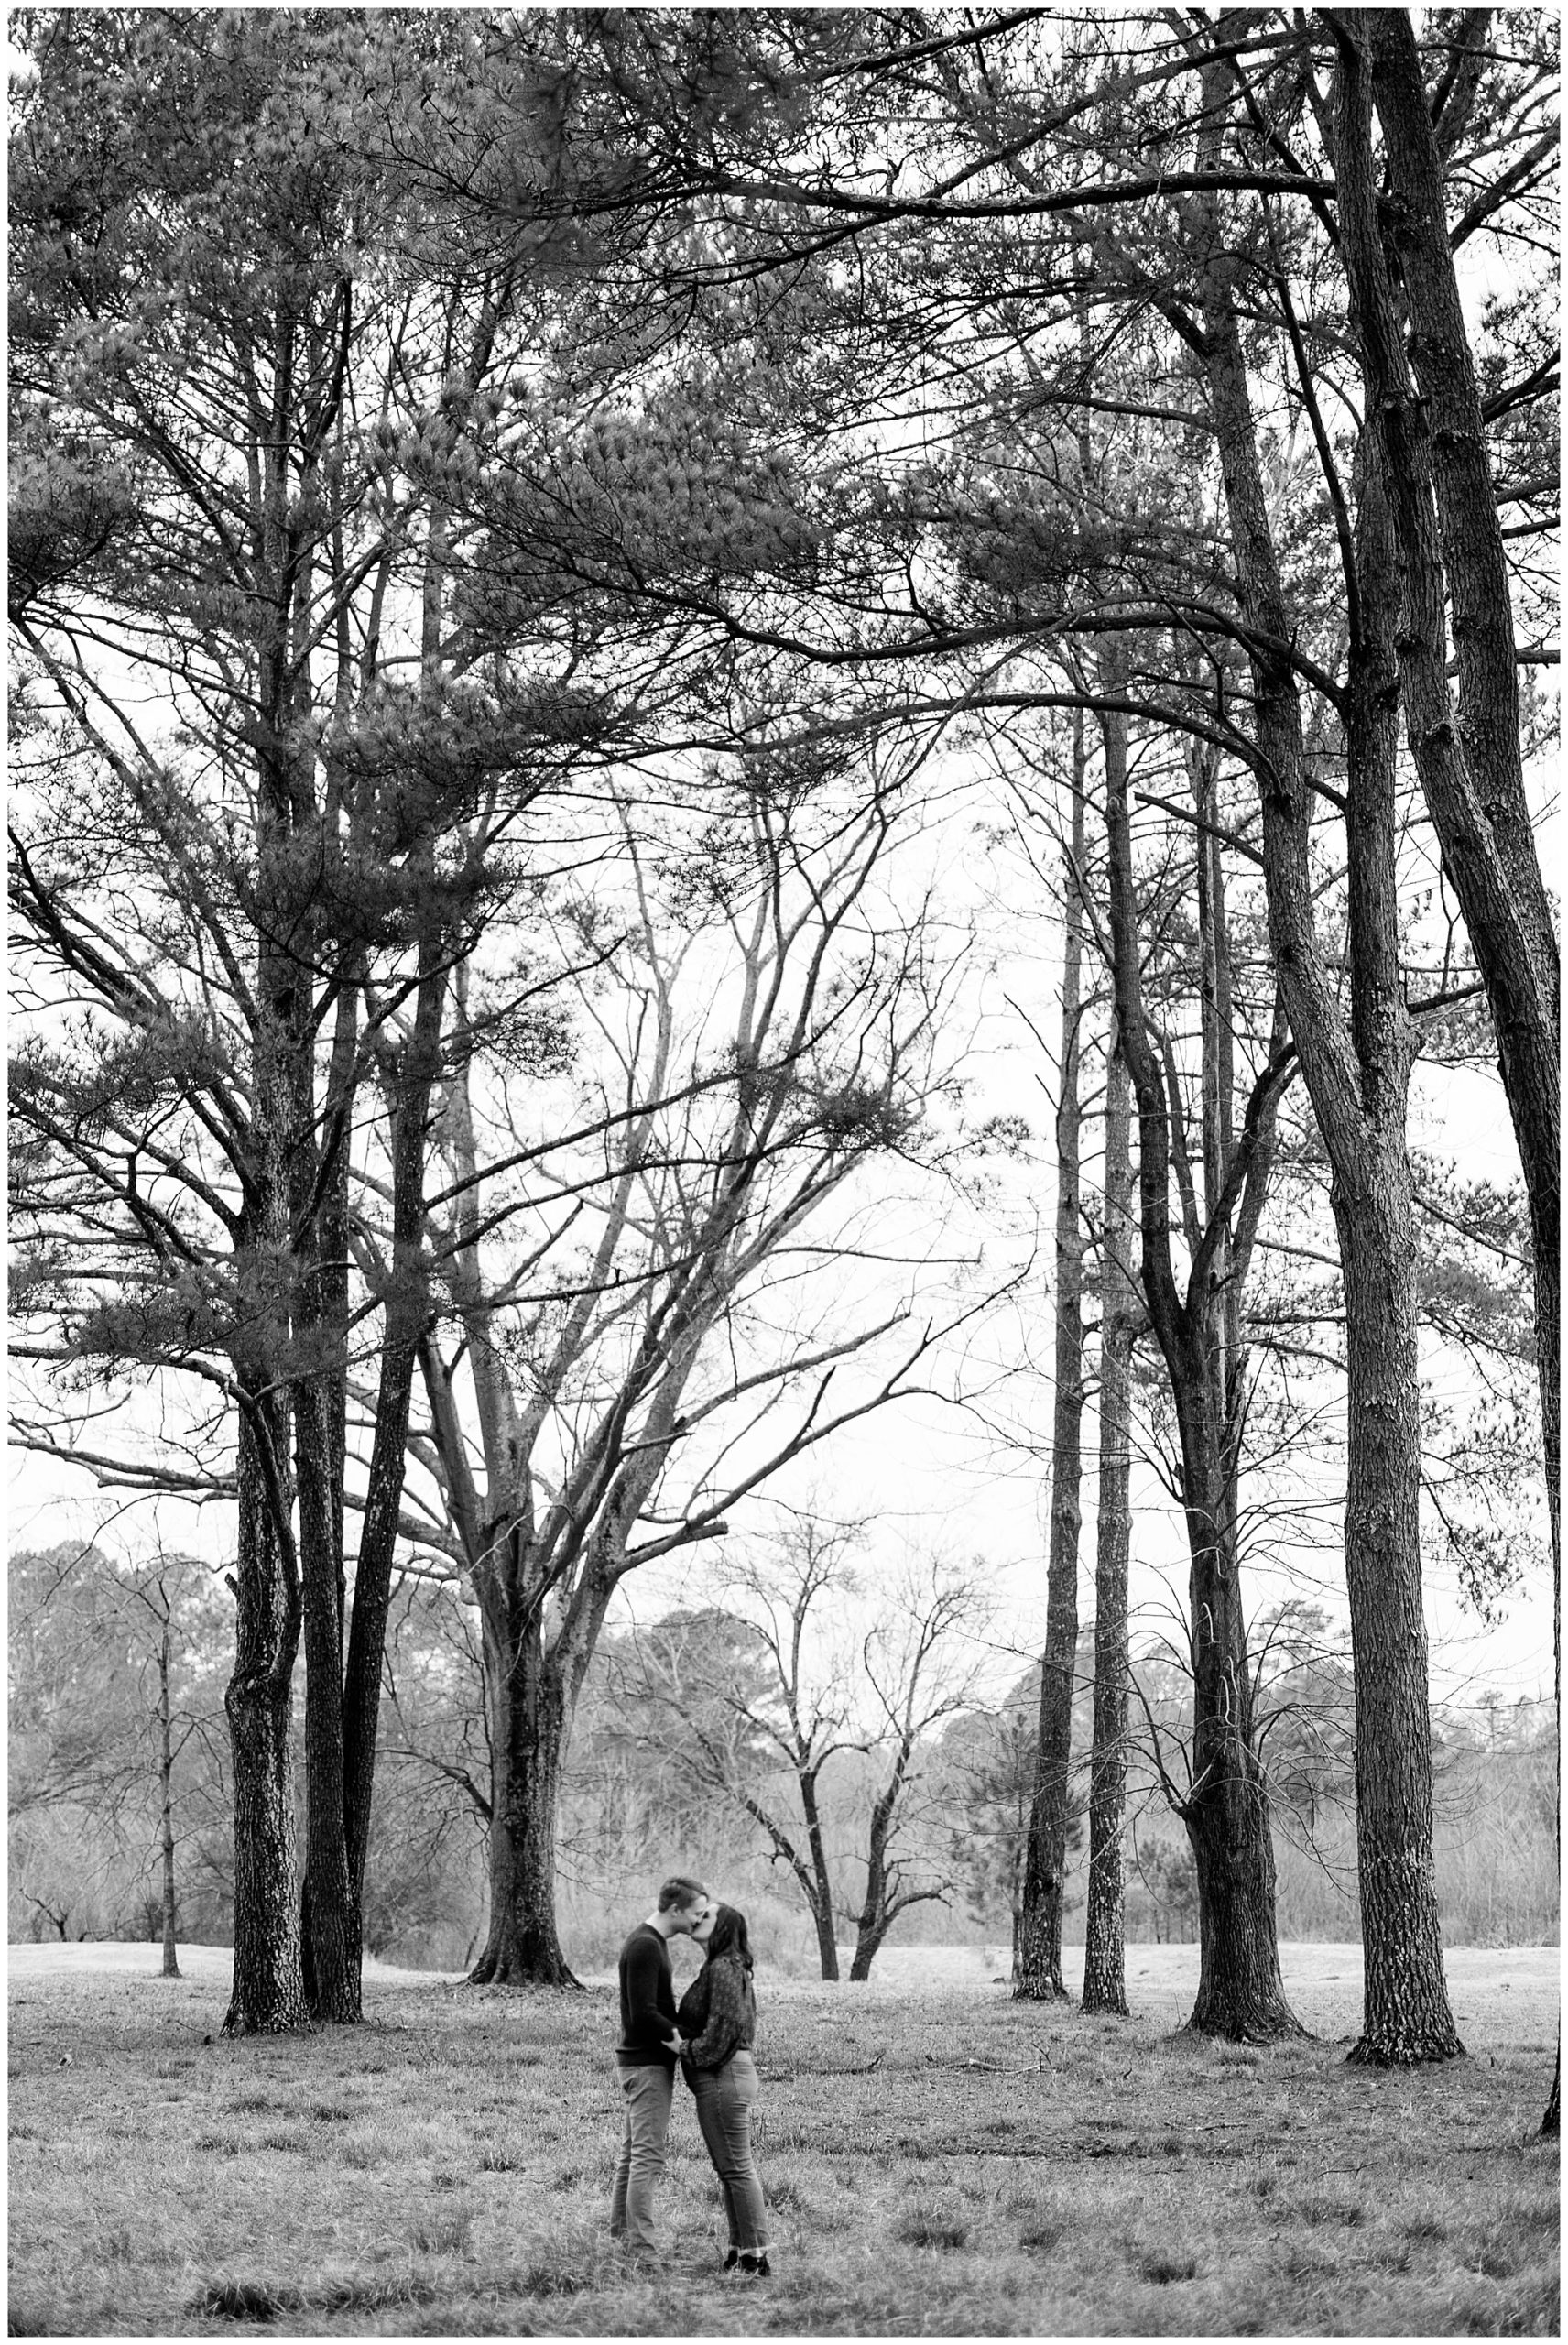 Eleanor Stenner Photography - a Birmingham, Alabama Wedding Photographer - photographed the future Codobas at Altadena Golf Course in Birmingham, Alabama